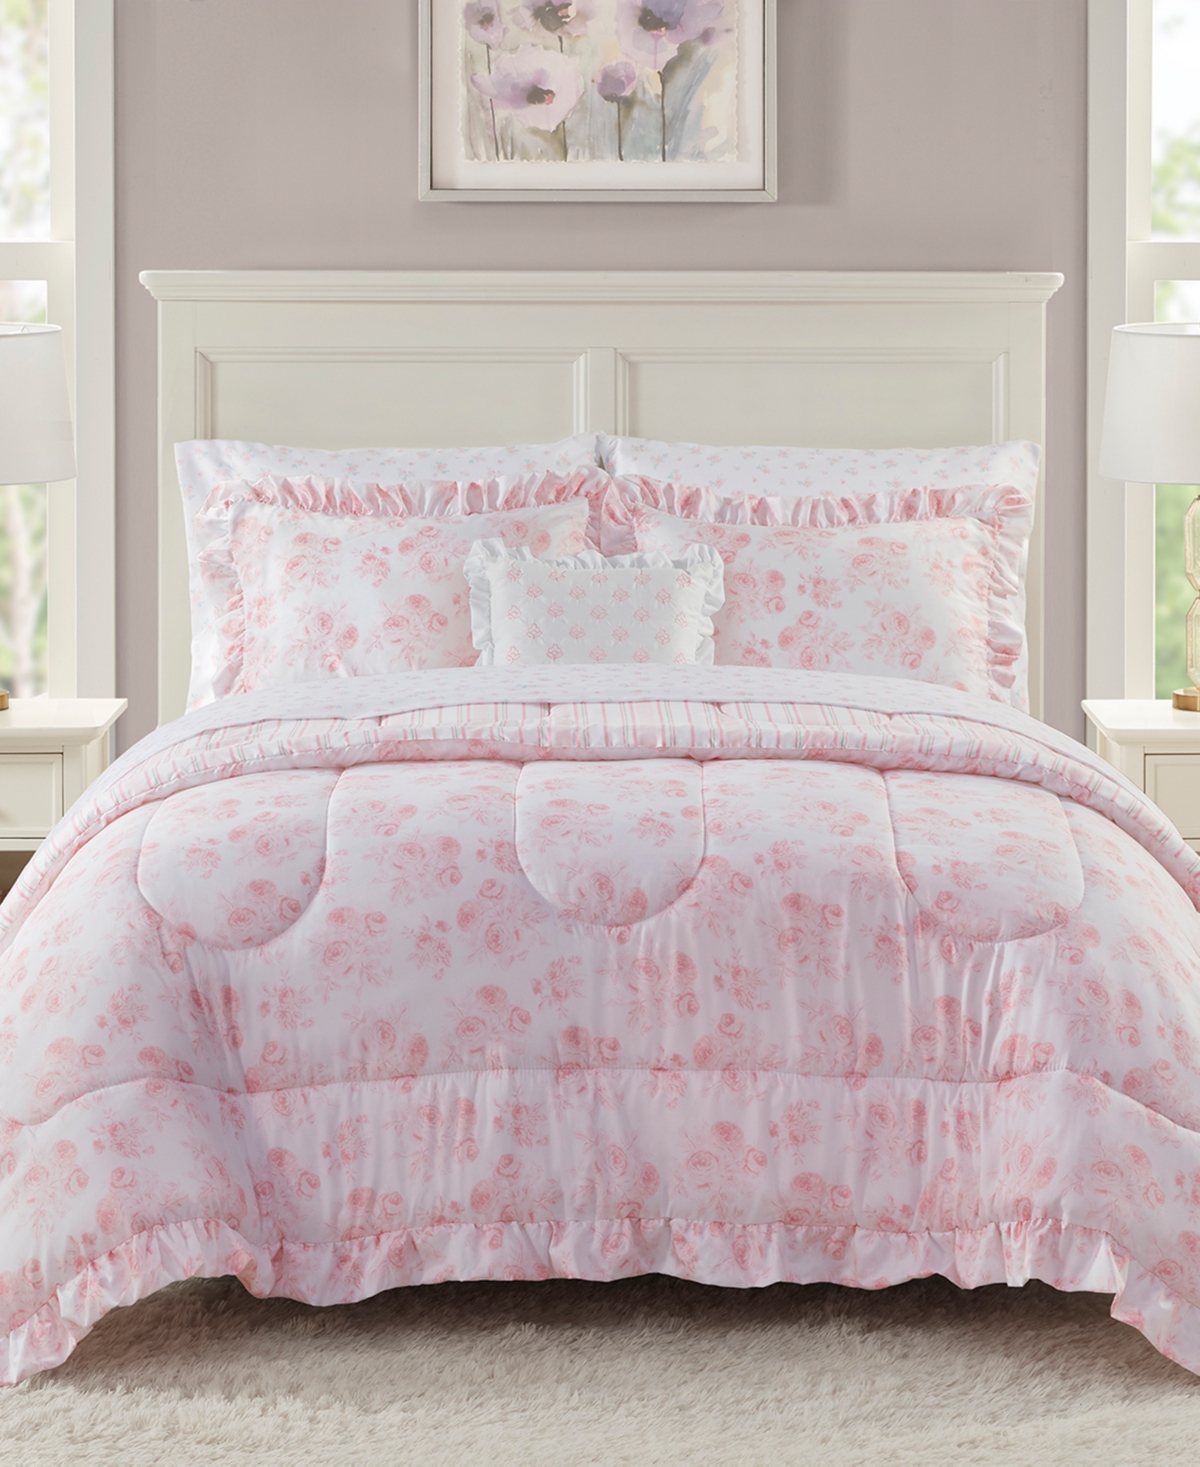 Jla Home Mia Ruffle 4-pc. Comforter Set, King/california King, Created For Macy's In Pink